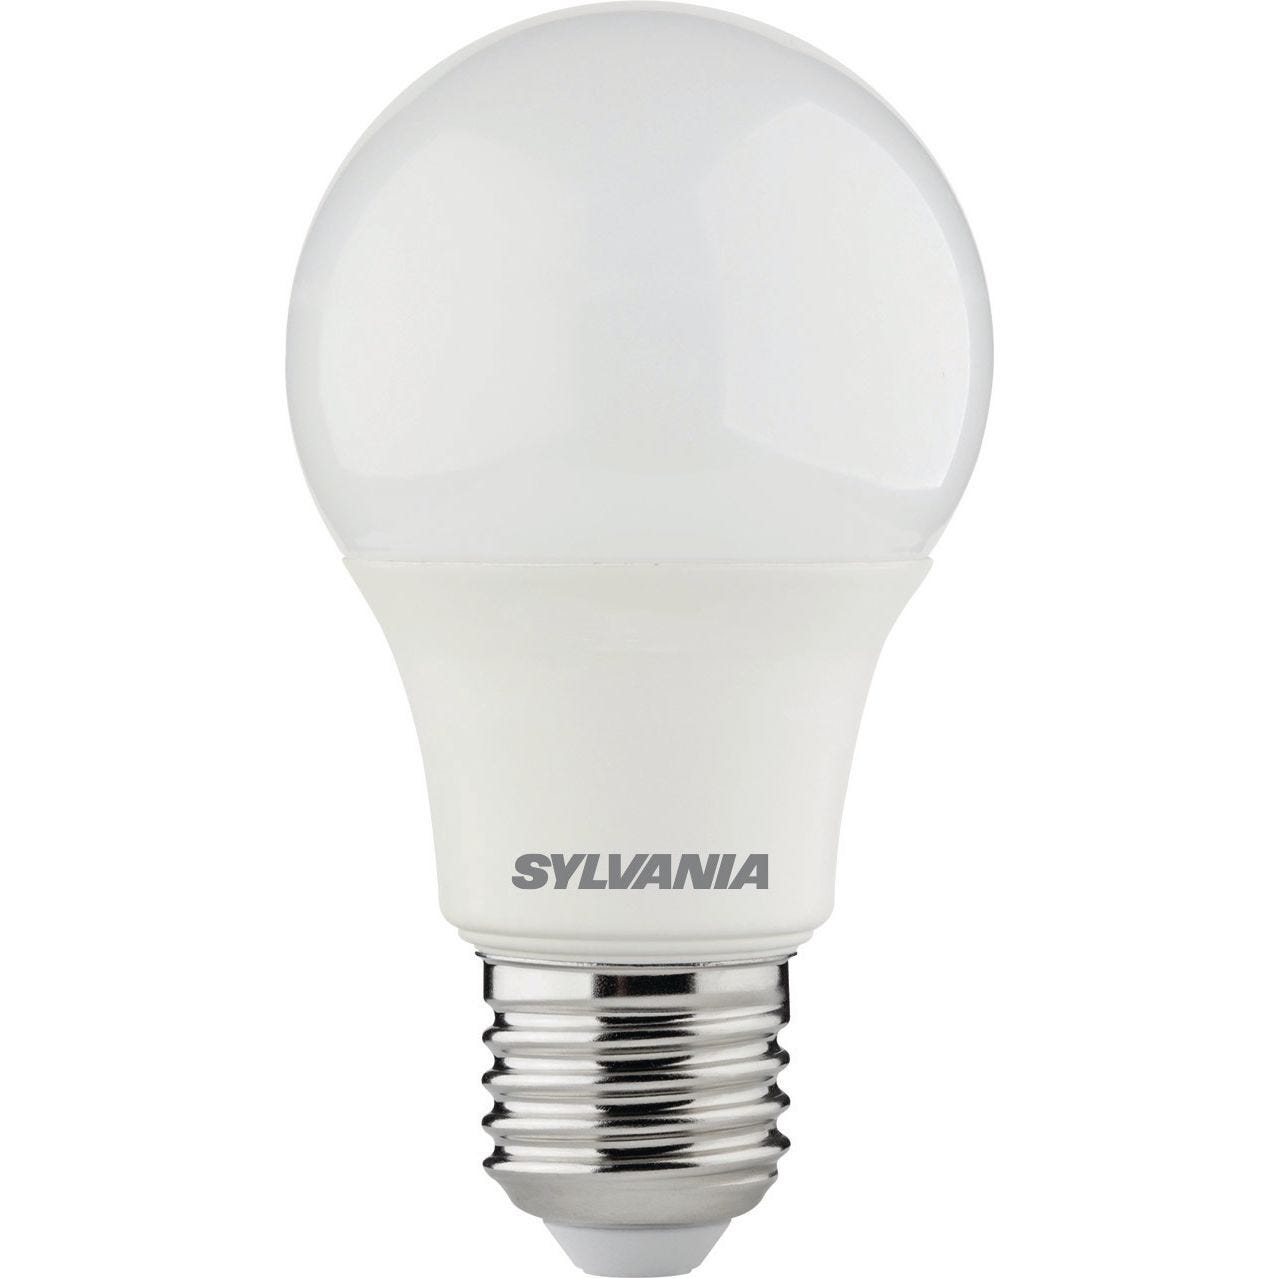 Lampe TOLEDO GLS A60 IRC 80 230V 806lm - SYLVANIA - 0029585 0